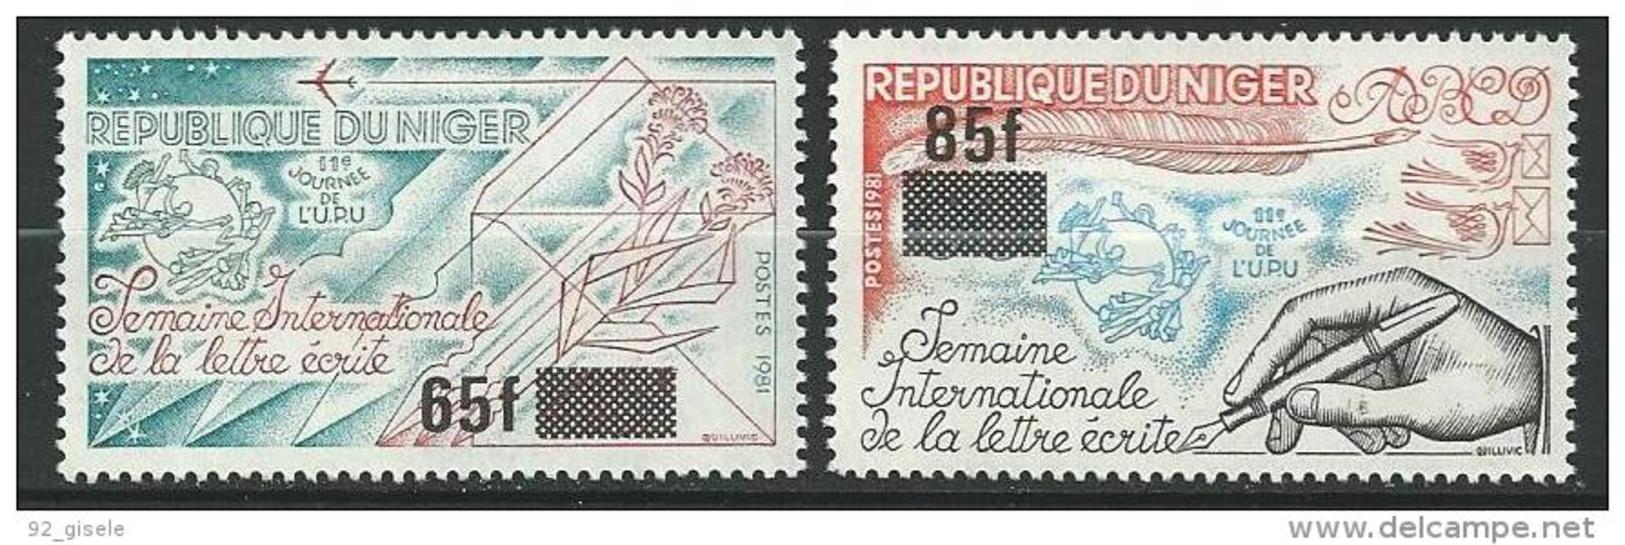 Niger YT 547 & 548 " Journée De L'UPU "1981 Neuf** - Niger (1960-...)